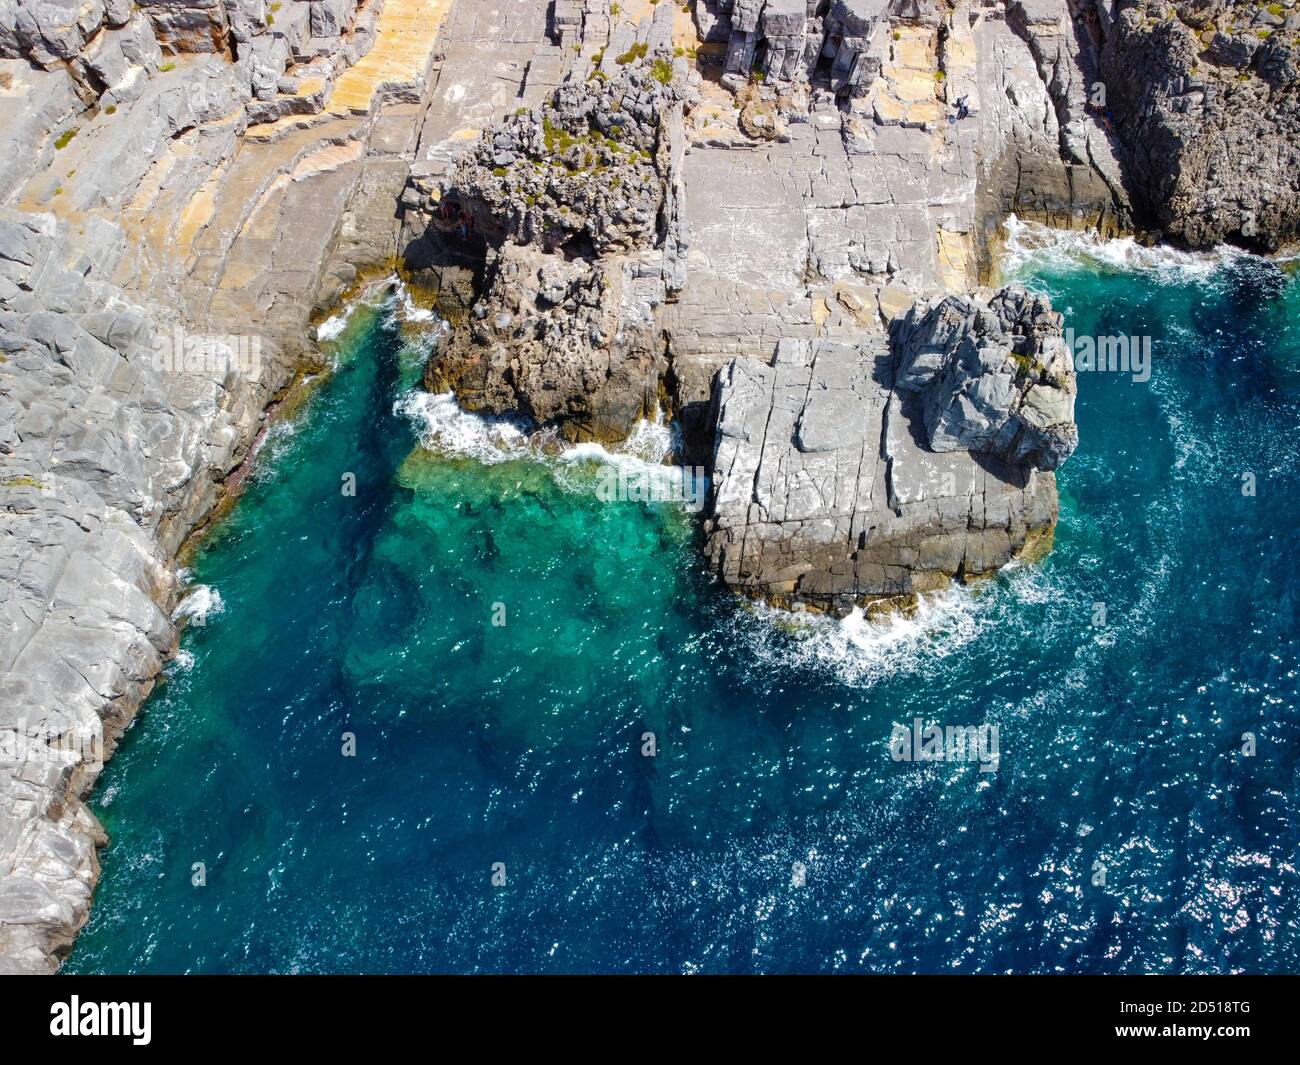 Aerial view of Katafygi rocky plateau beach in Mani, Greece Stock Photo